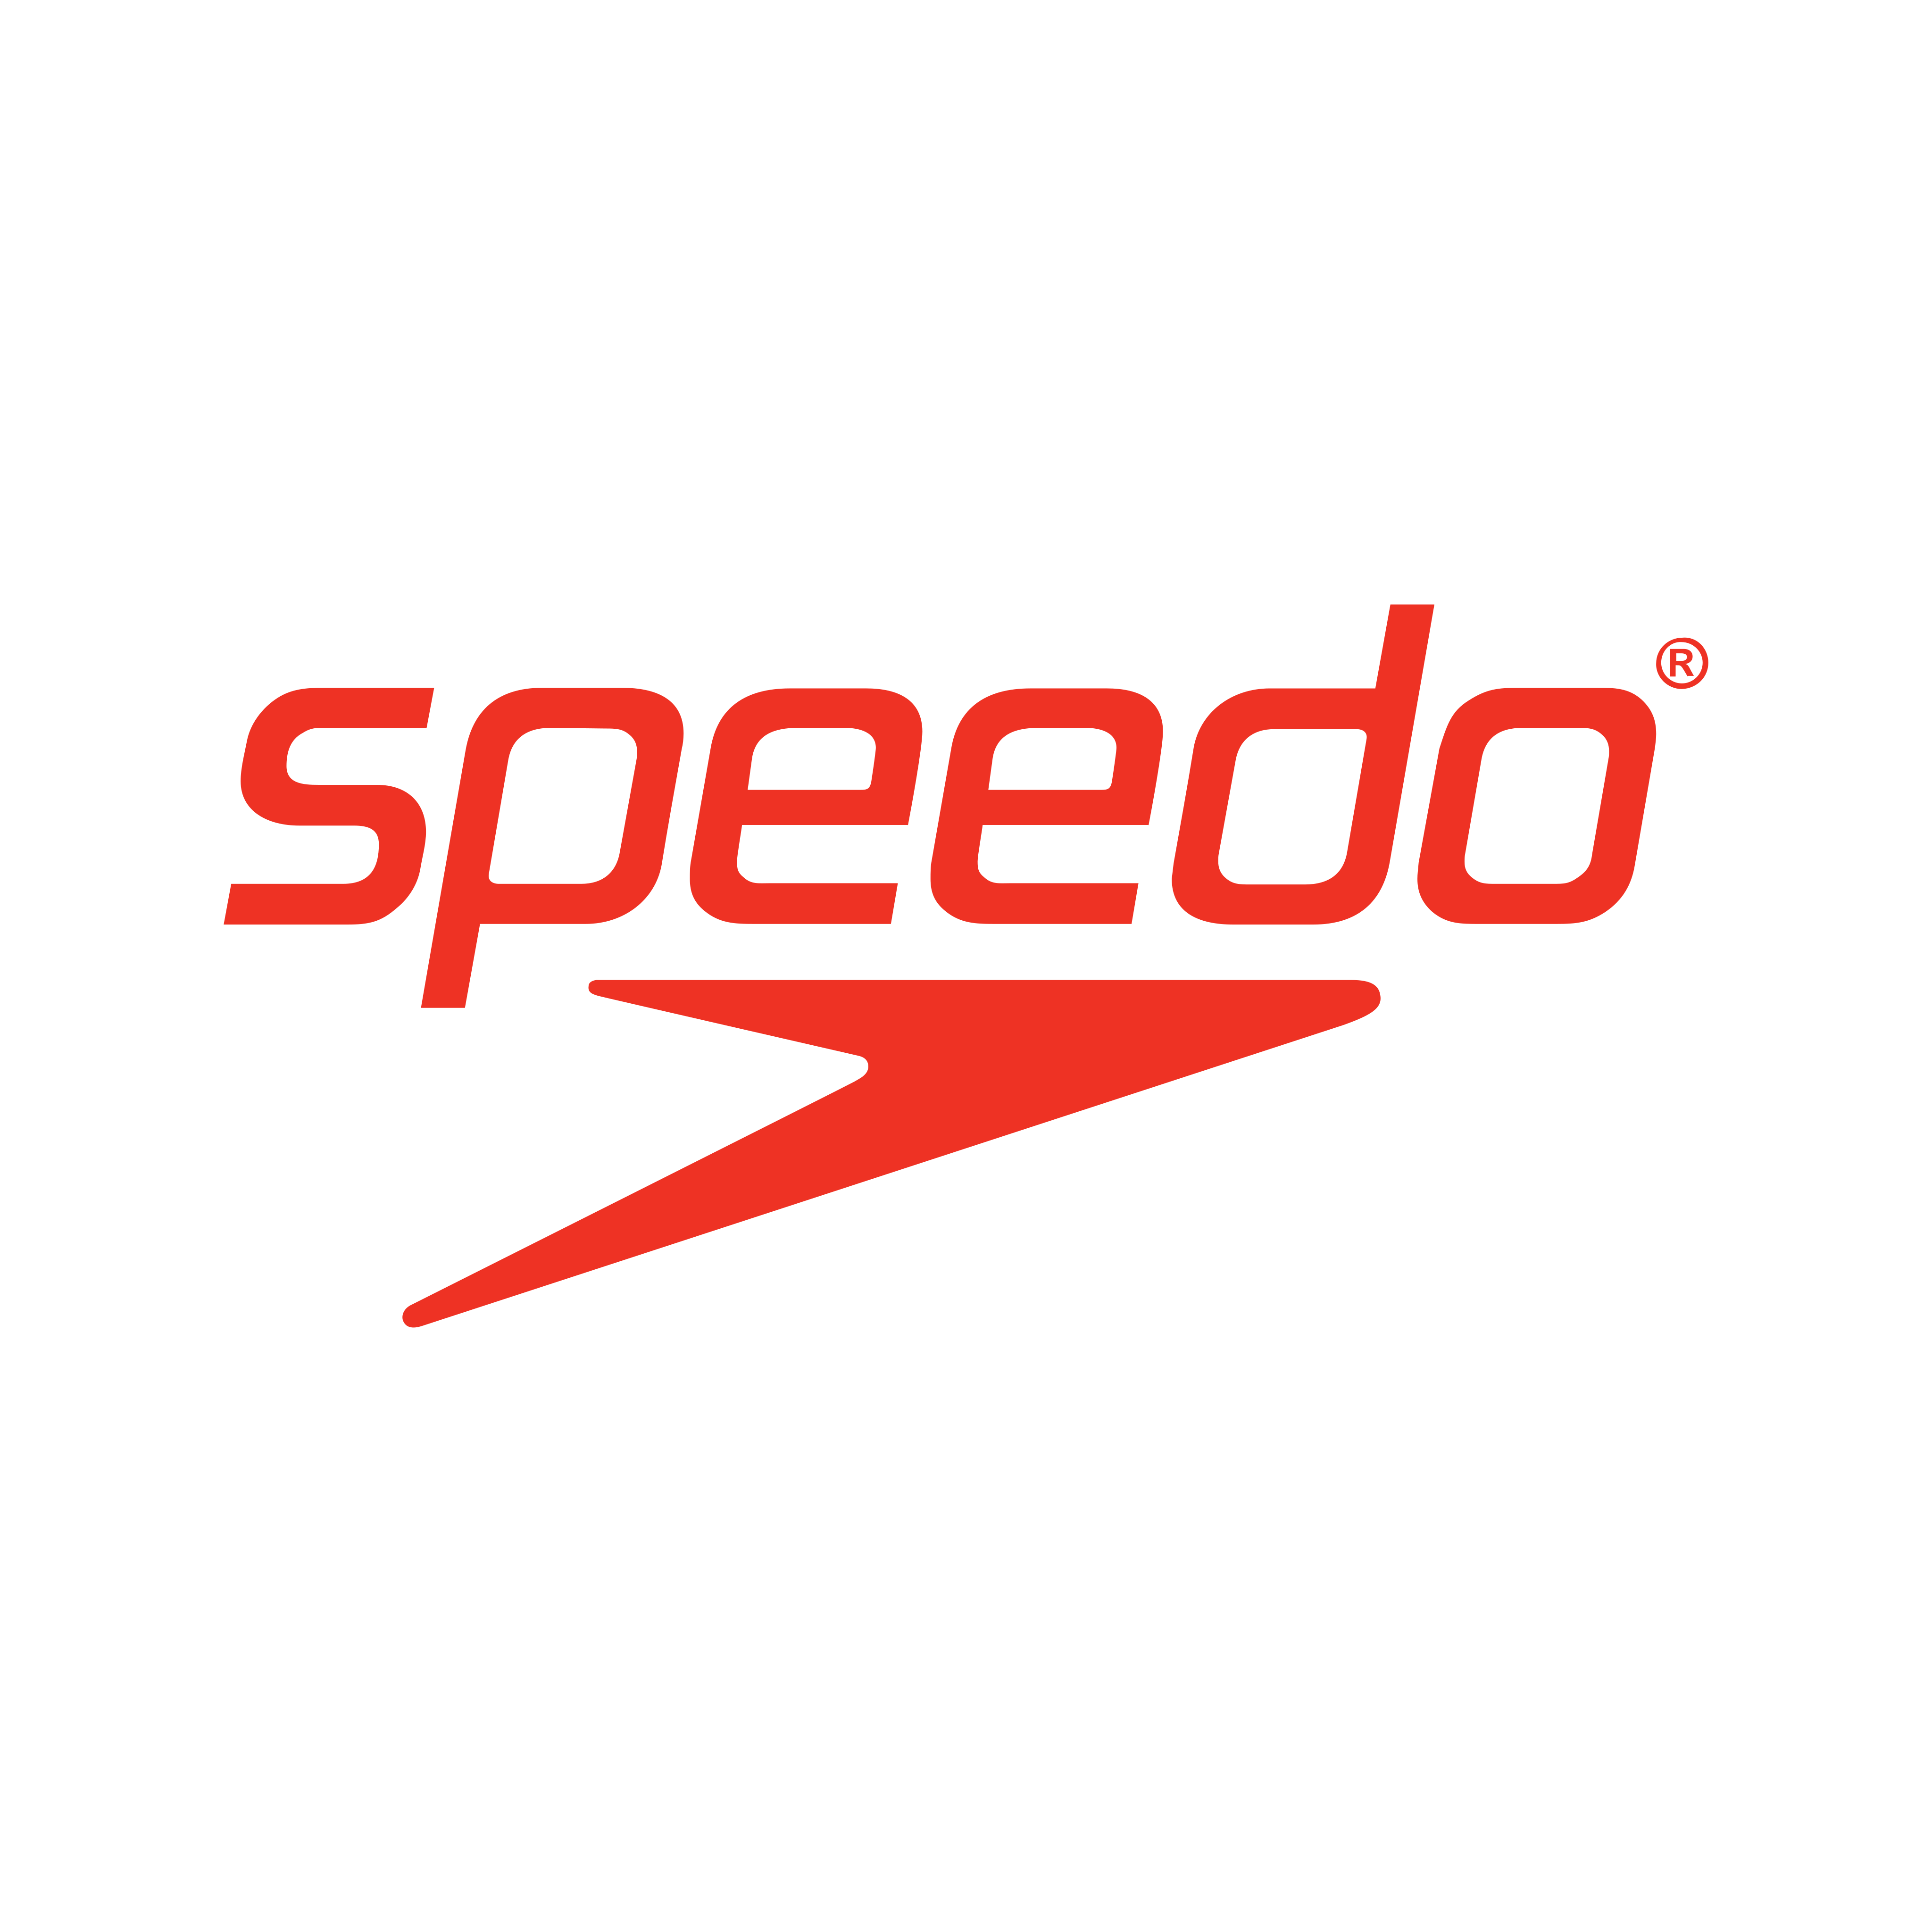 speedo logo 0 - Speedo Logo